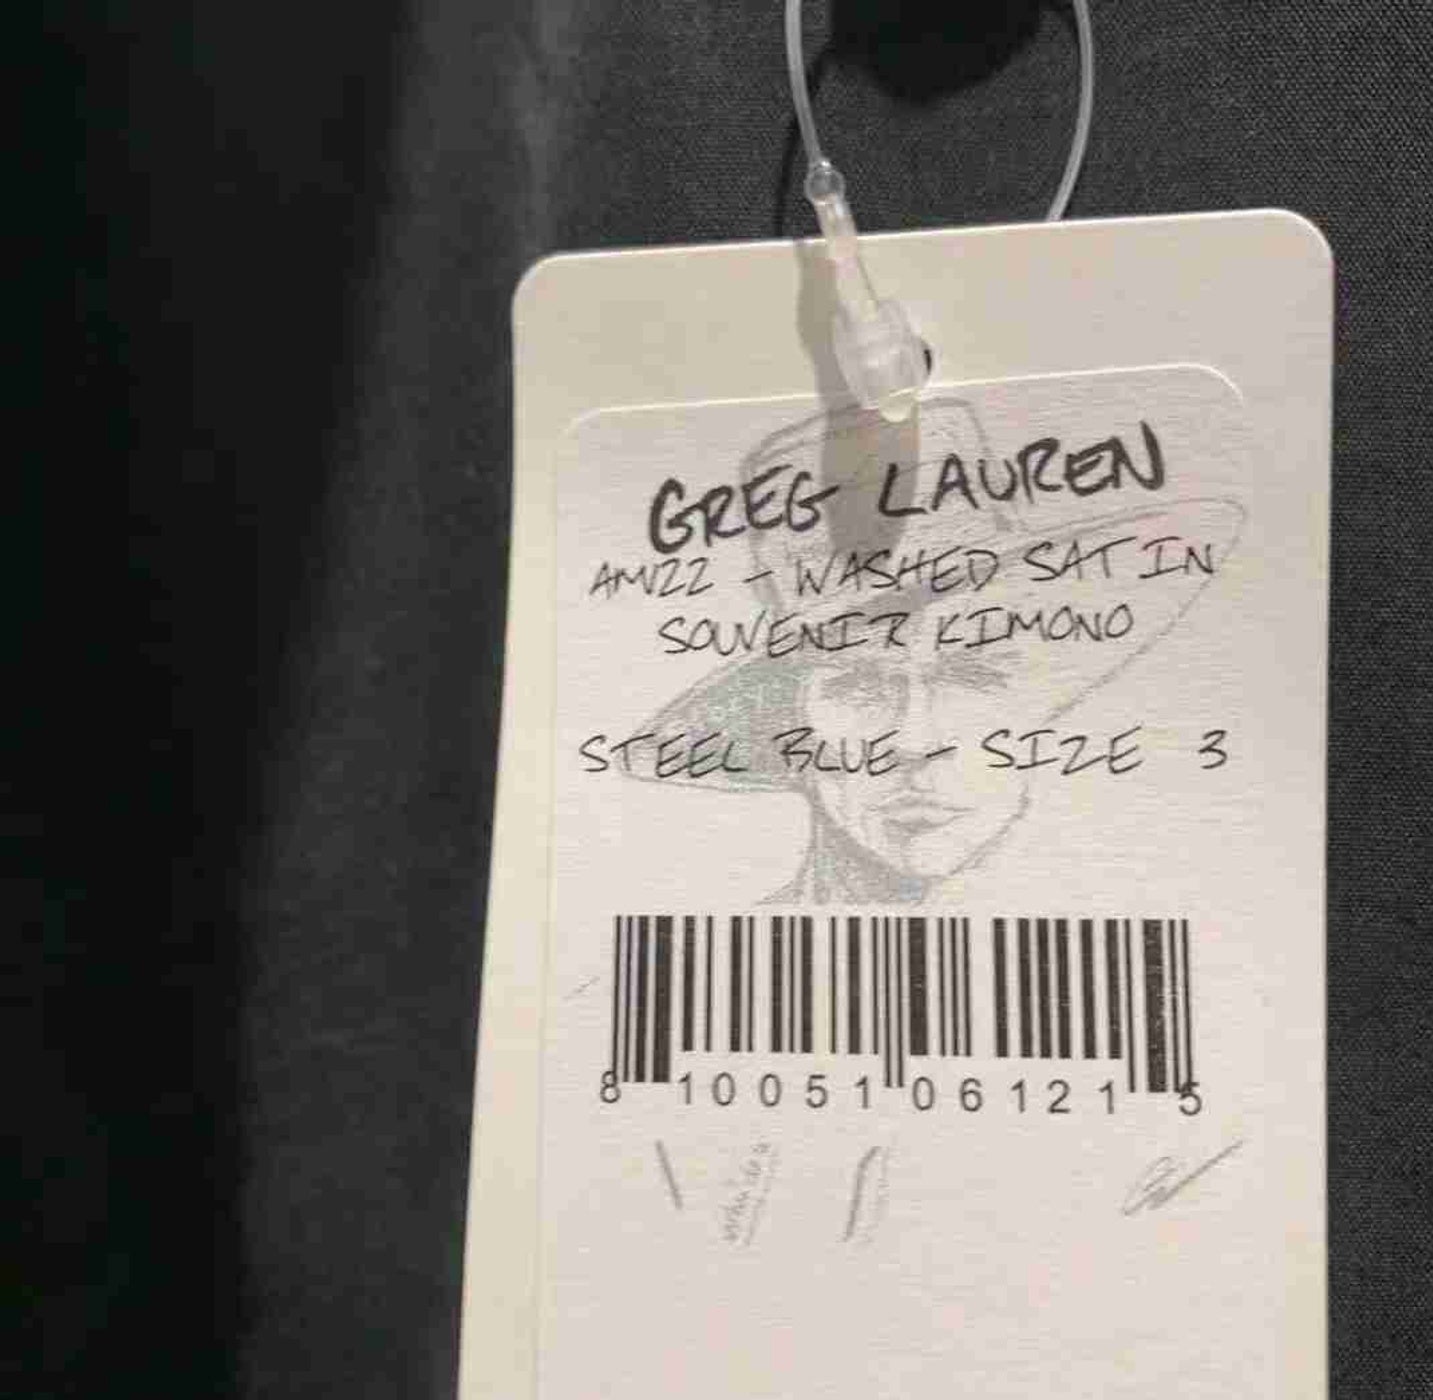 Greg Lauren Original New JKT Size 2/3